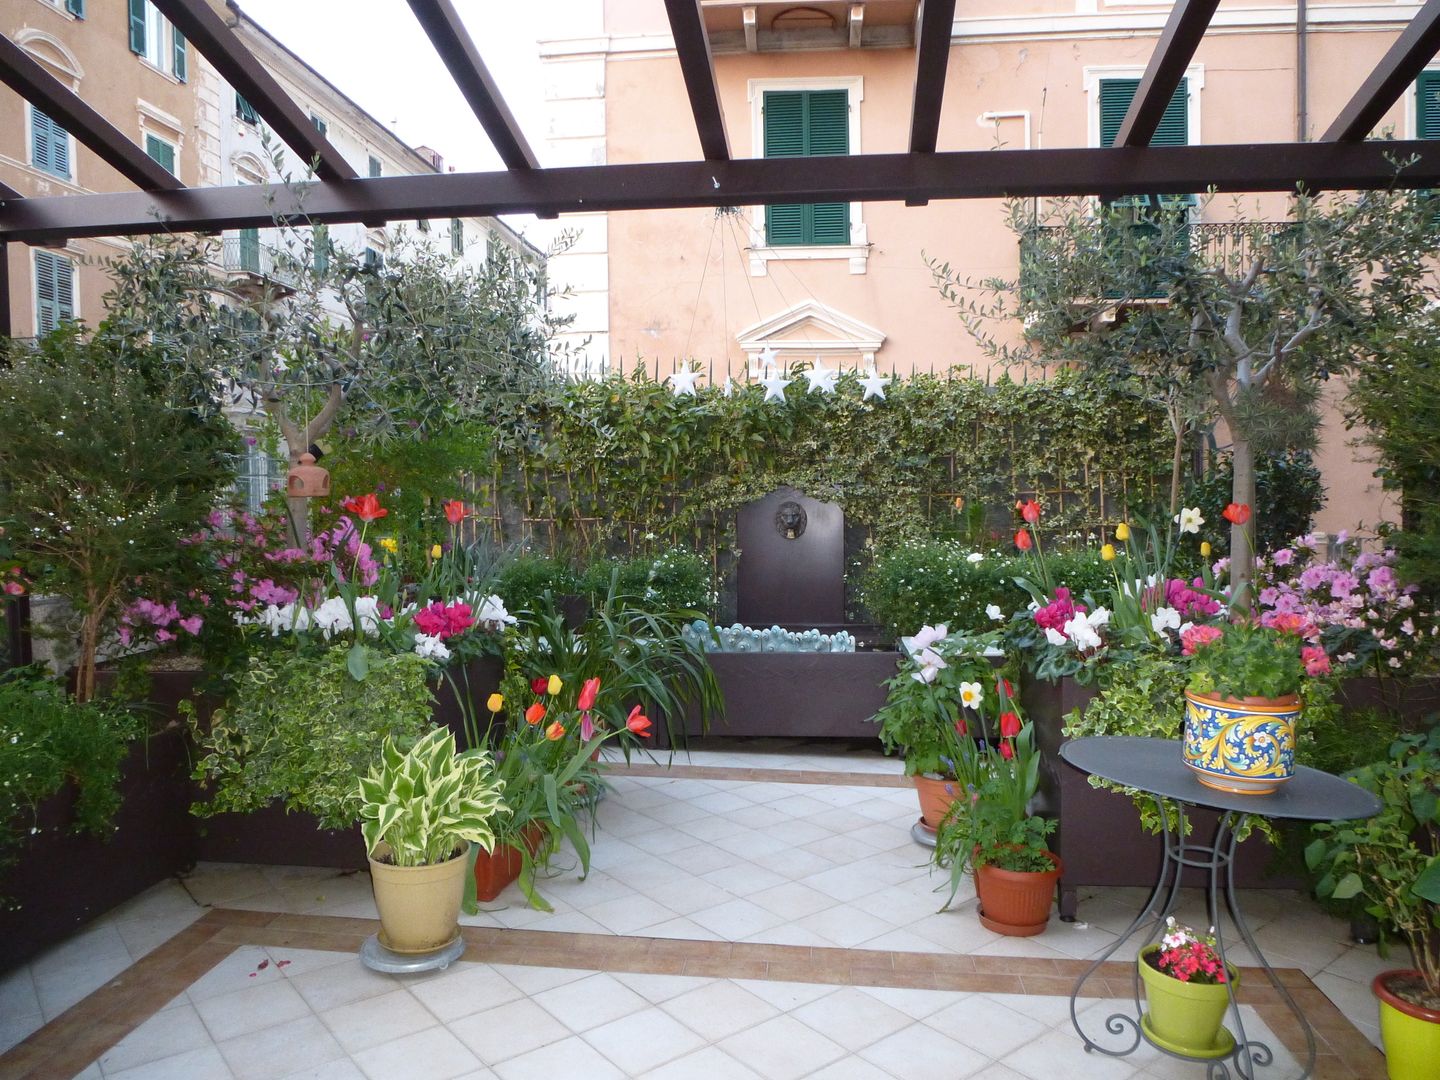 Verde Progetto - Adriana Pedrotti Garden Designerが手掛けたクラシック, クラシック